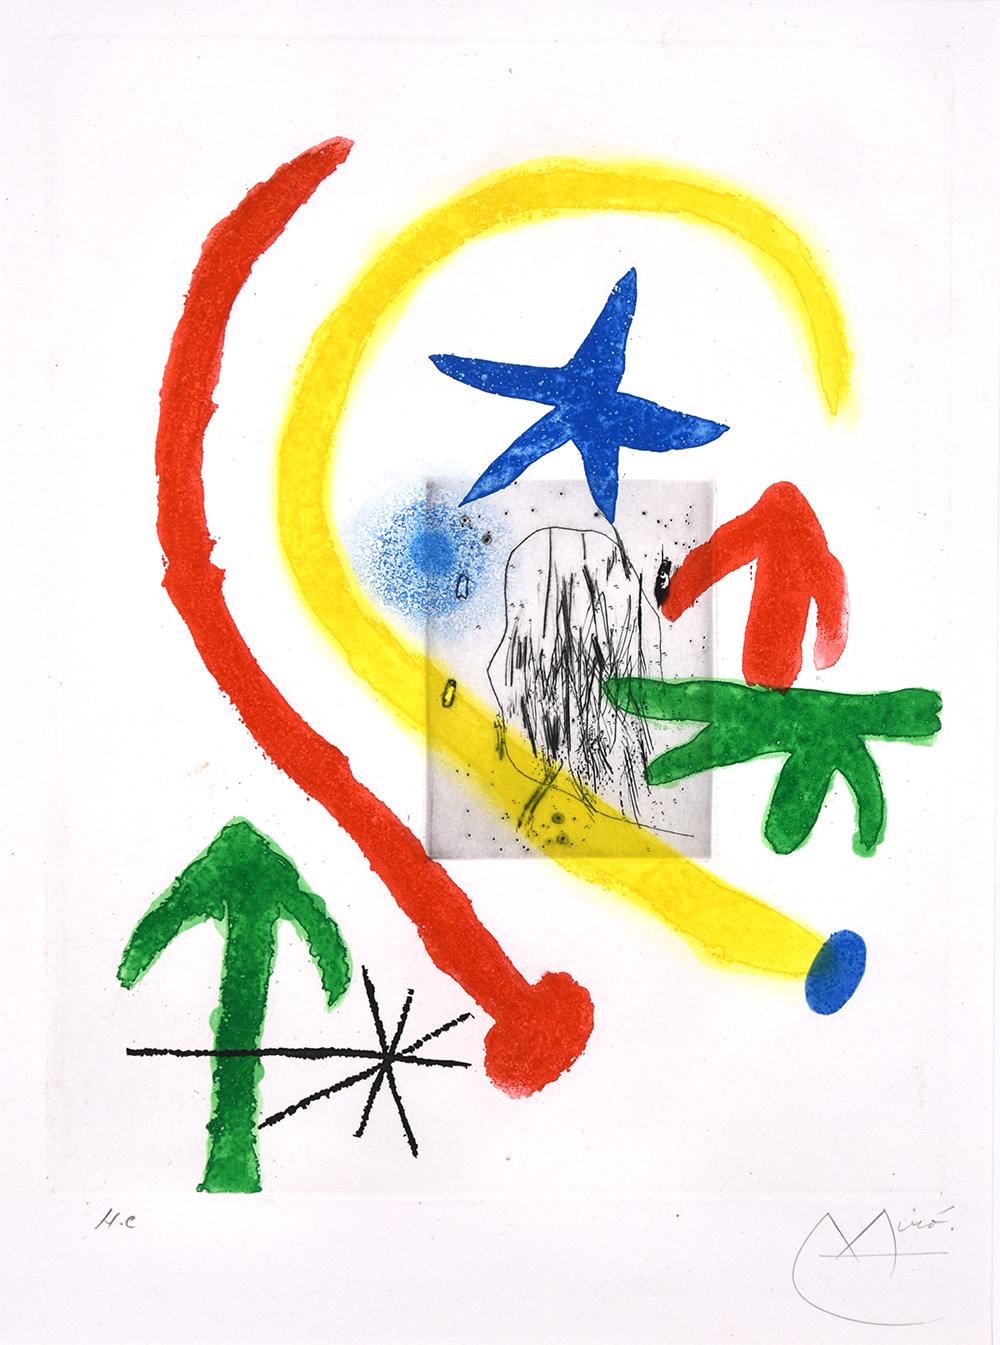 Joan Miró, Chemin de Ronde II (Round Path II), 1966